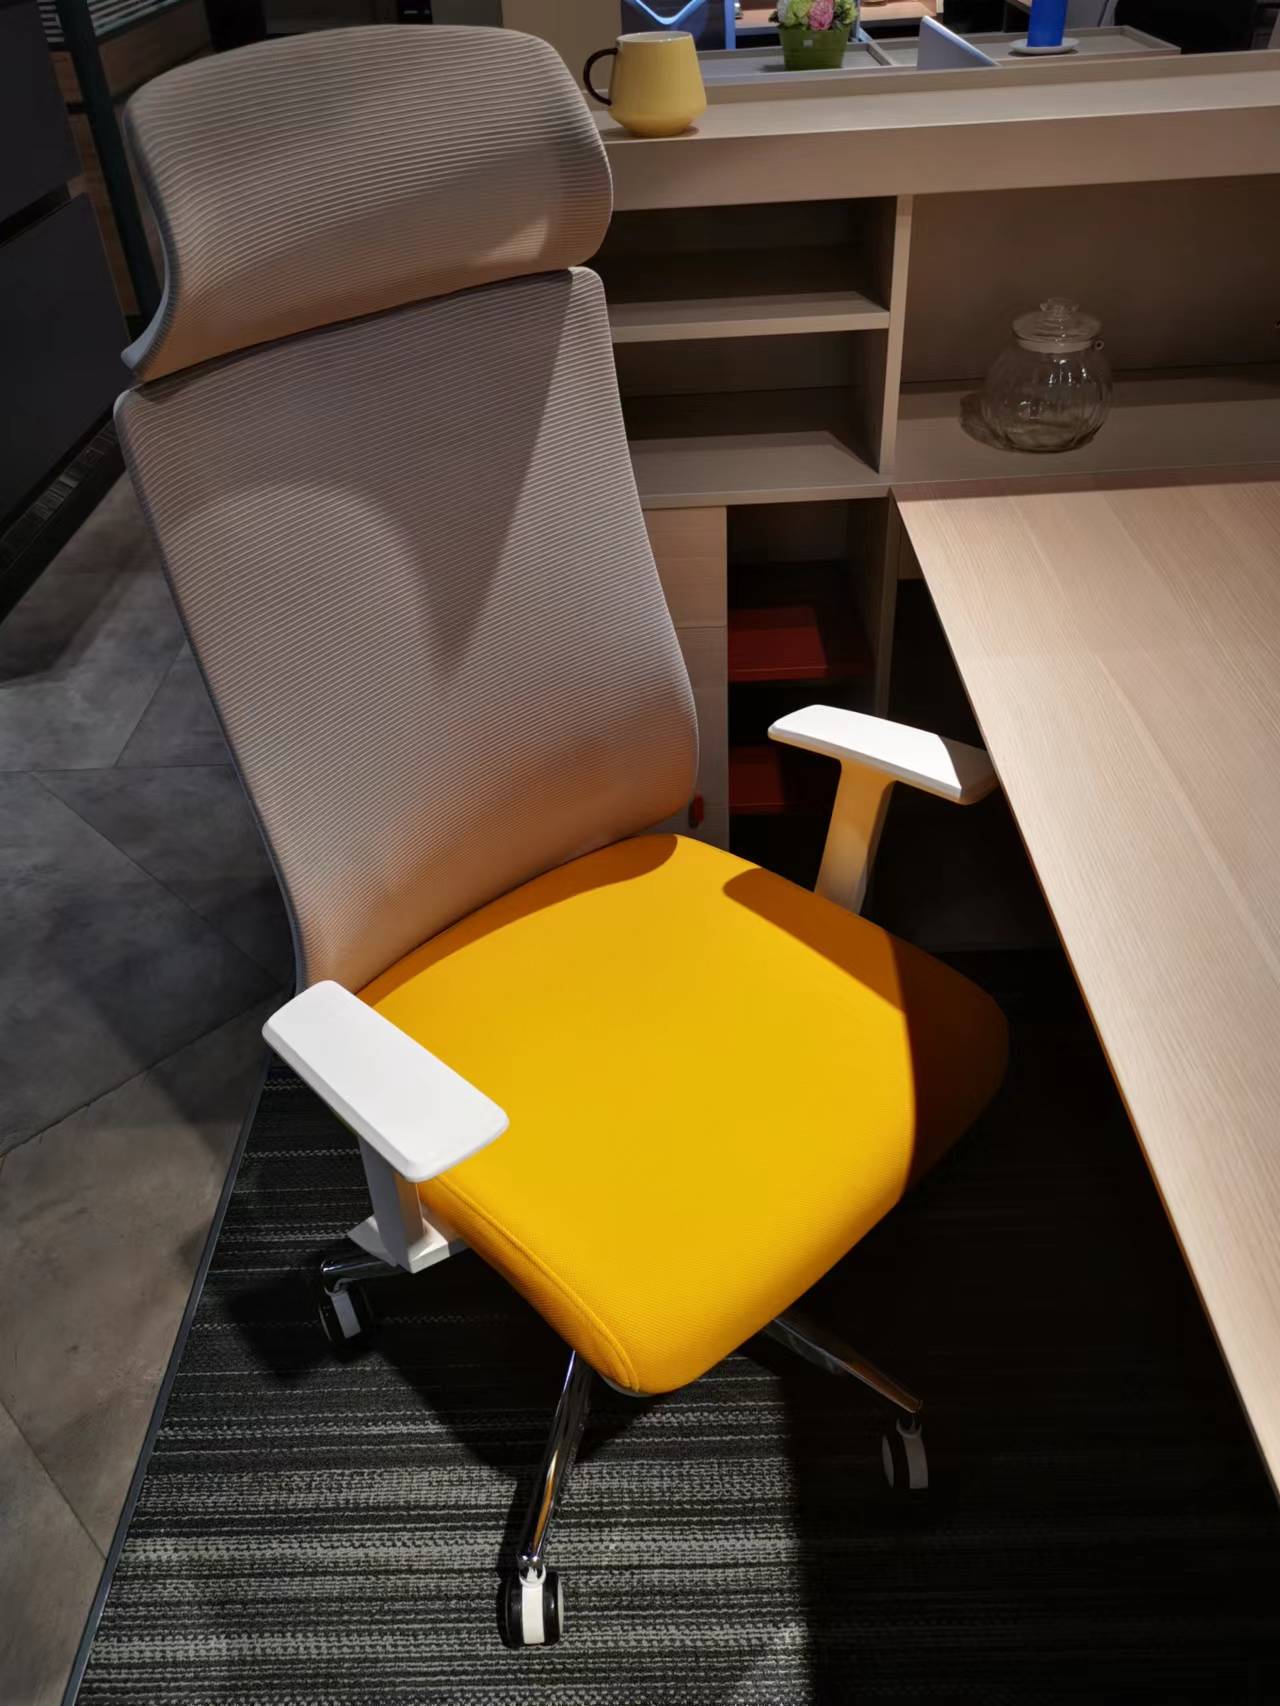 VOFFOV® Mesh Ergonomic Chair, Premium Office & Computer Chair with Adjustable Headrest - Yellow Grey